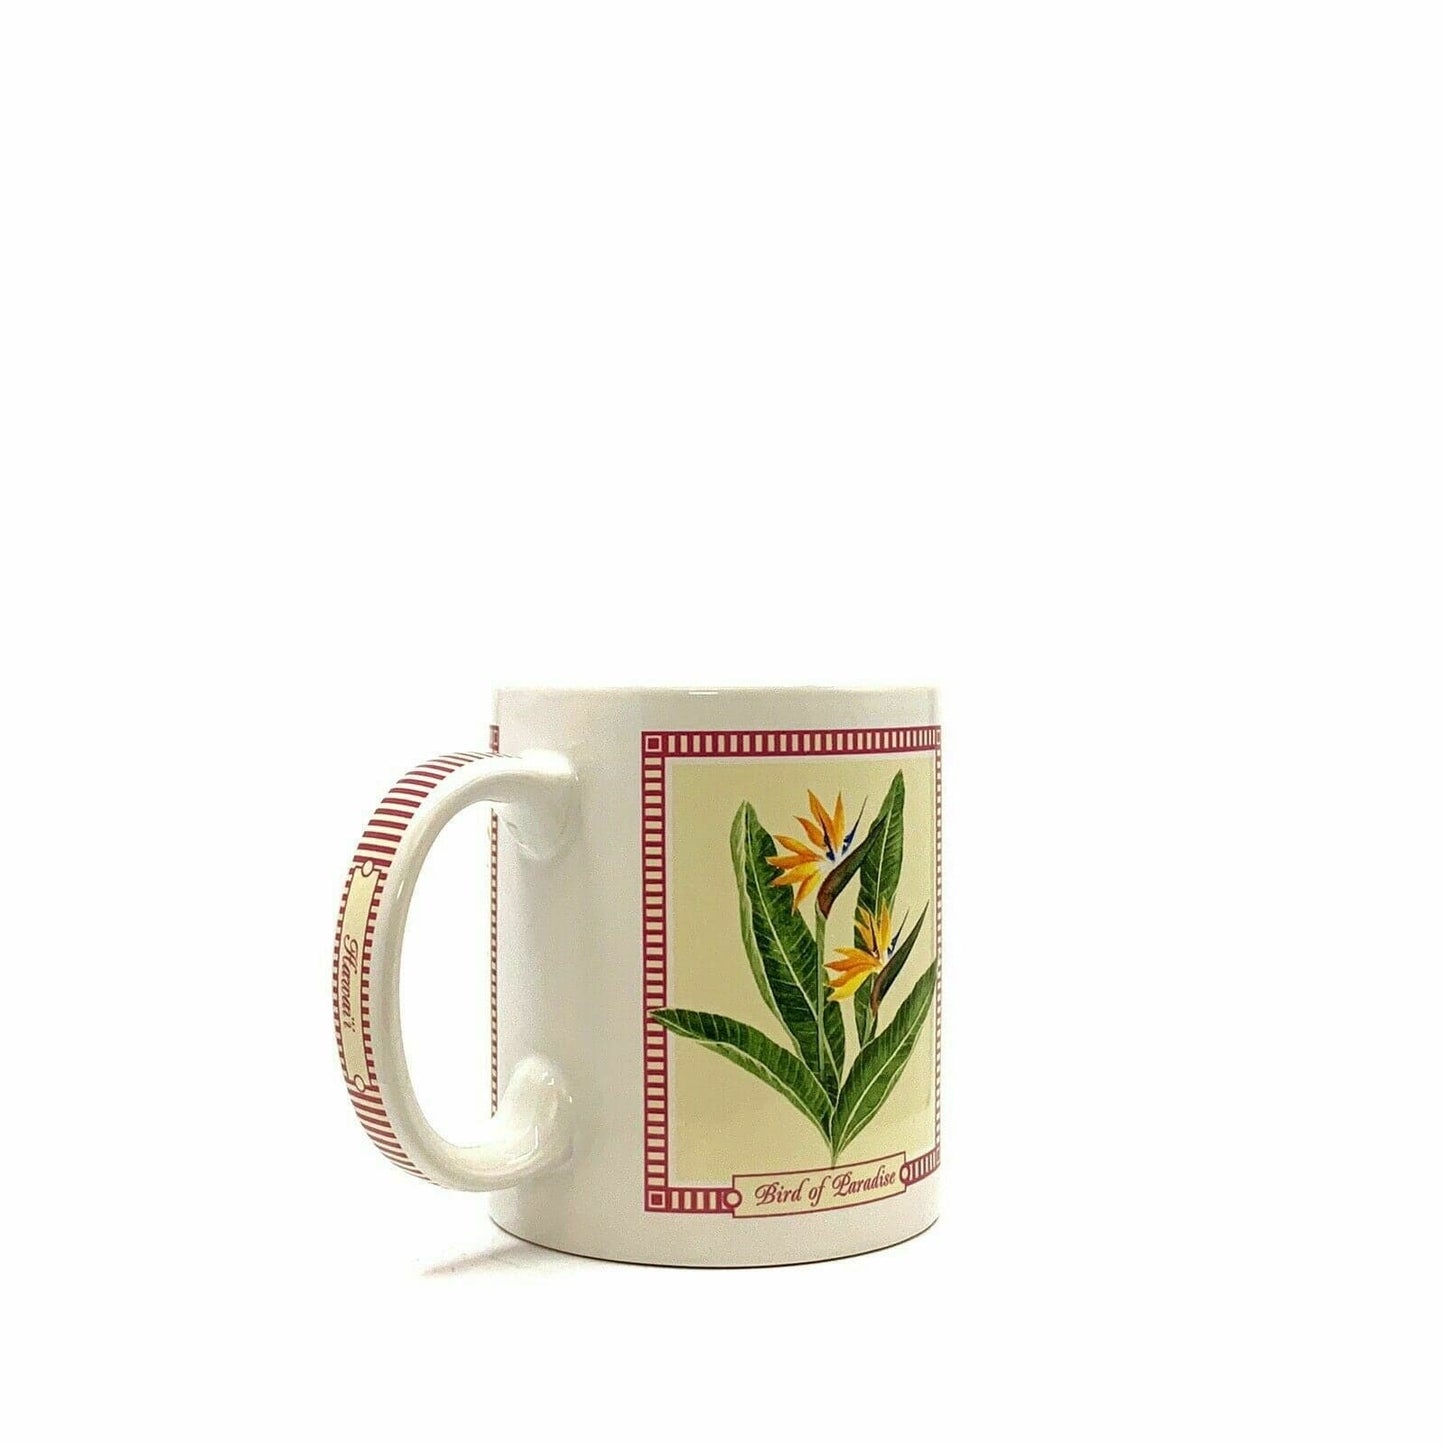 Captivating Hilo Hattie Coffee Mug - Tropical Flowers - Very Good Condition